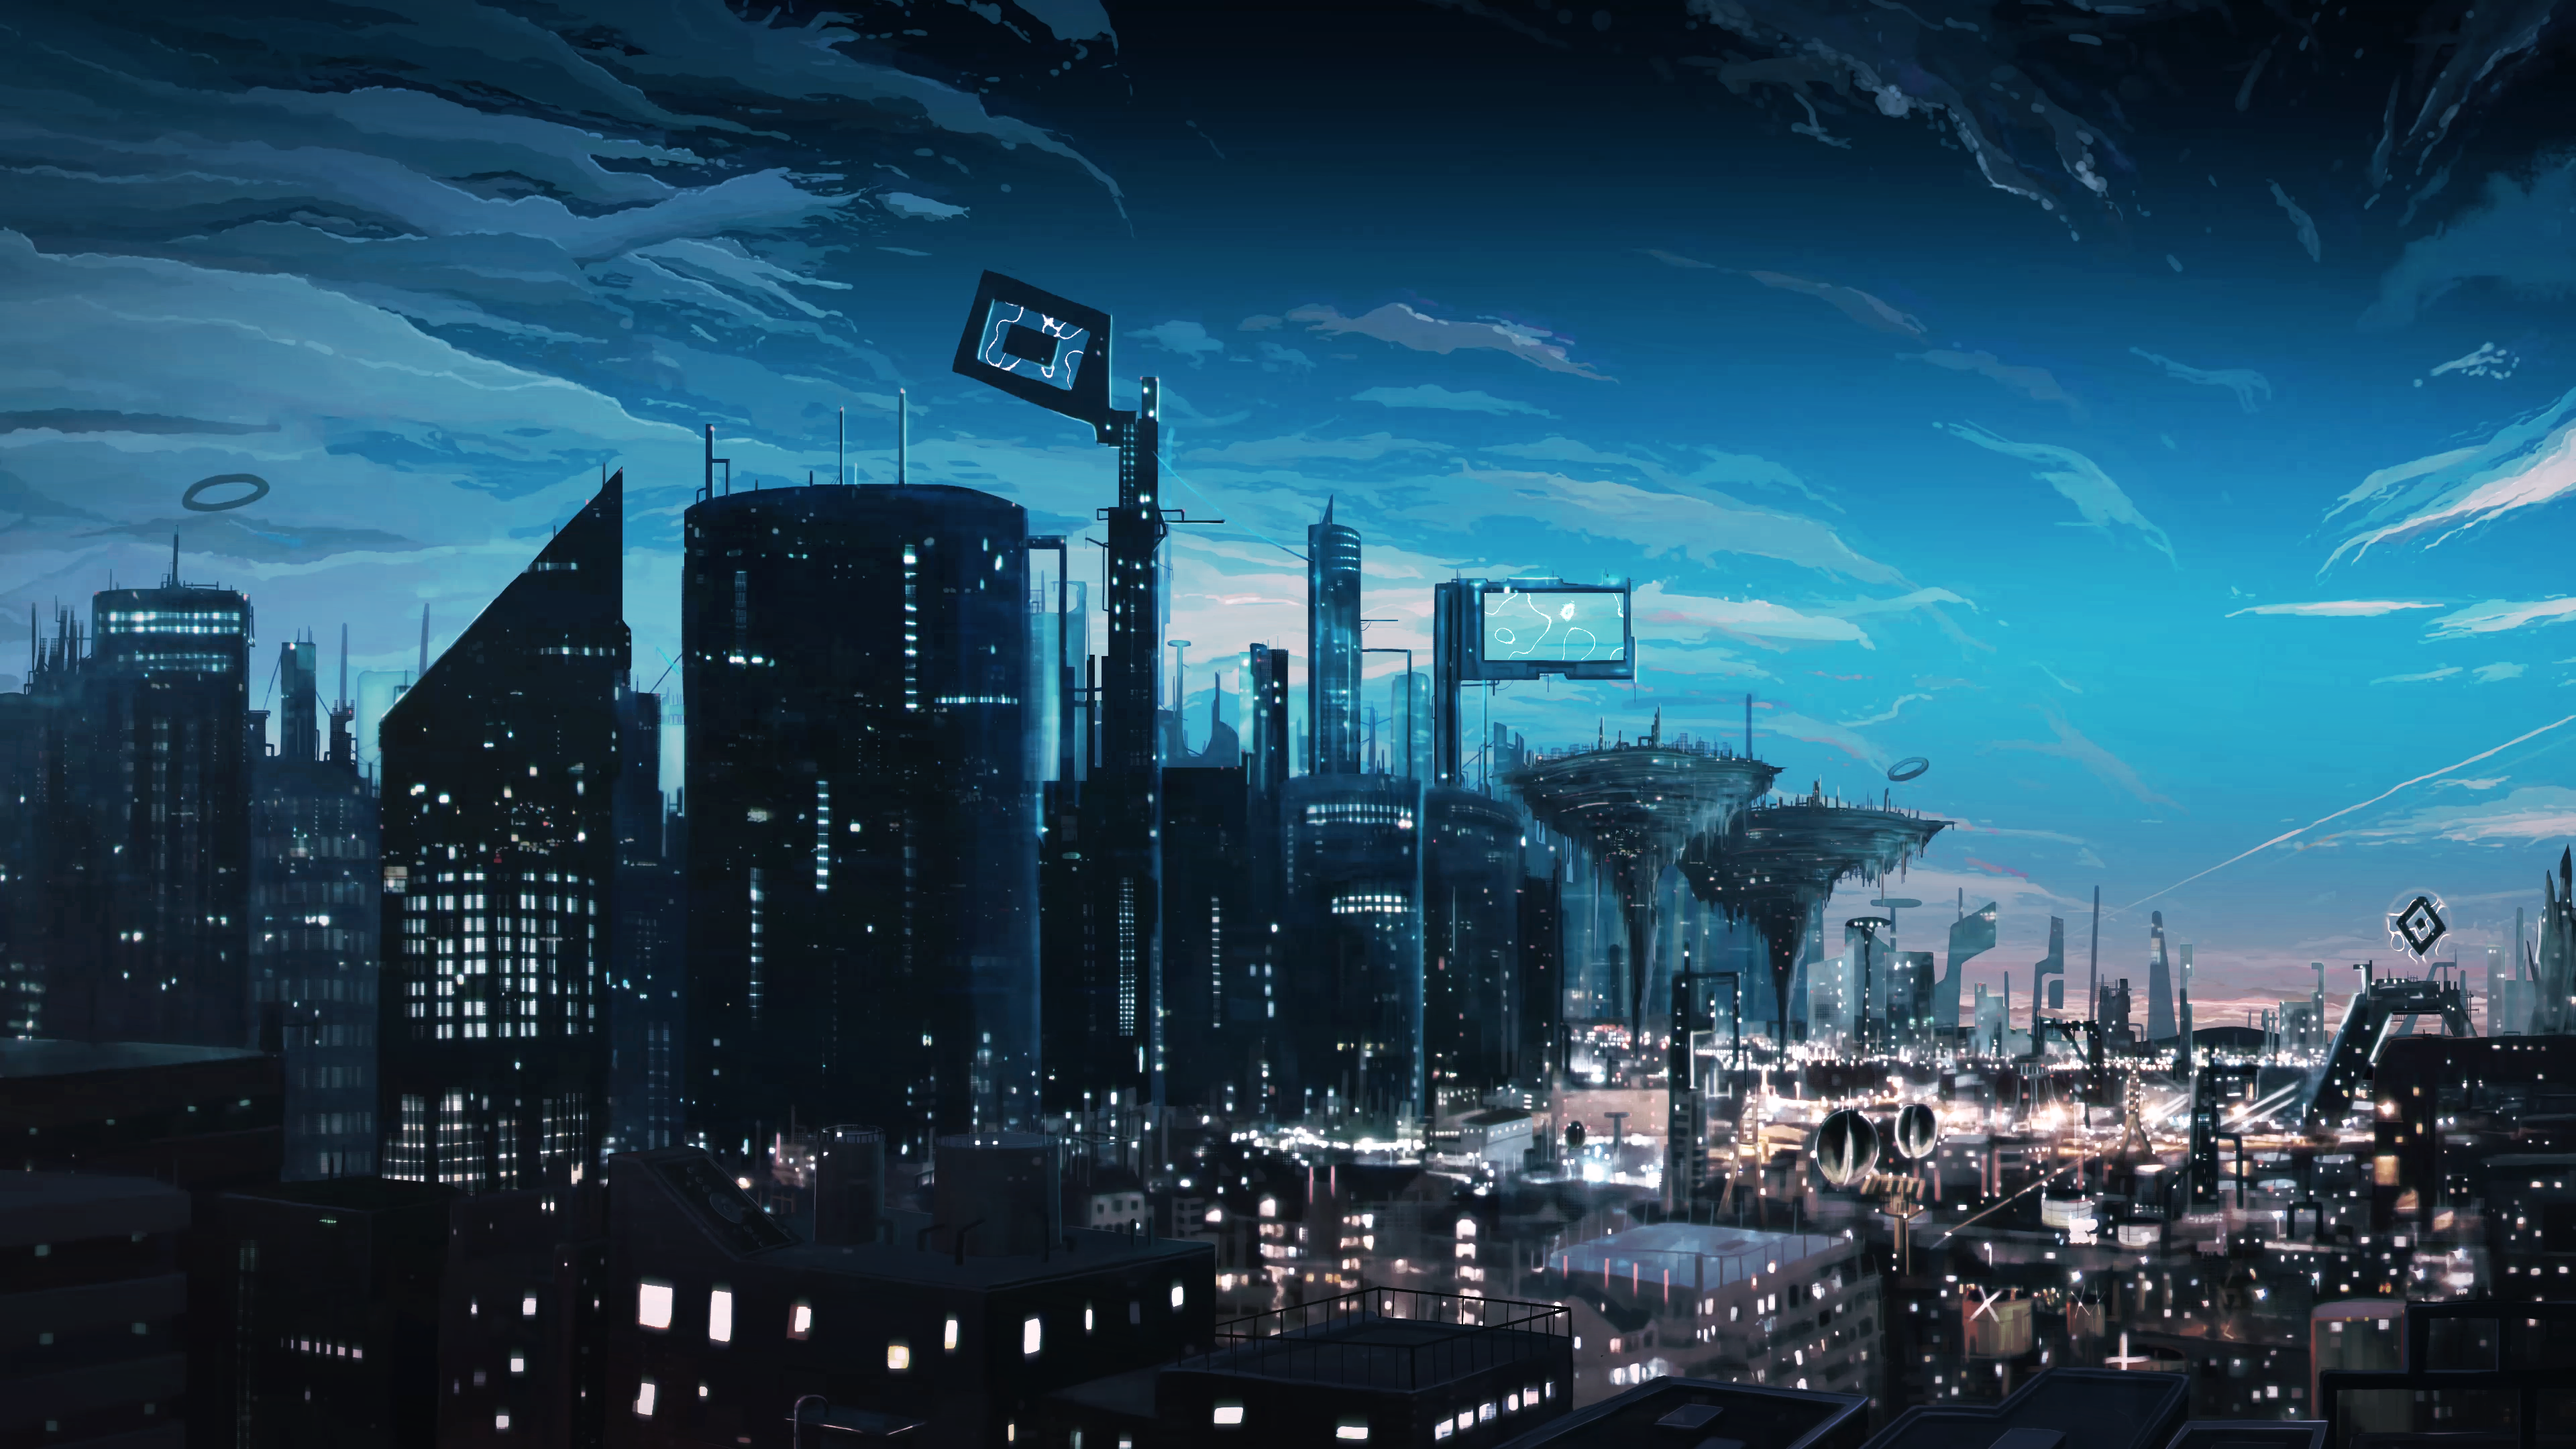 Anime City 4k Ultra HD Wallpaper by banishment